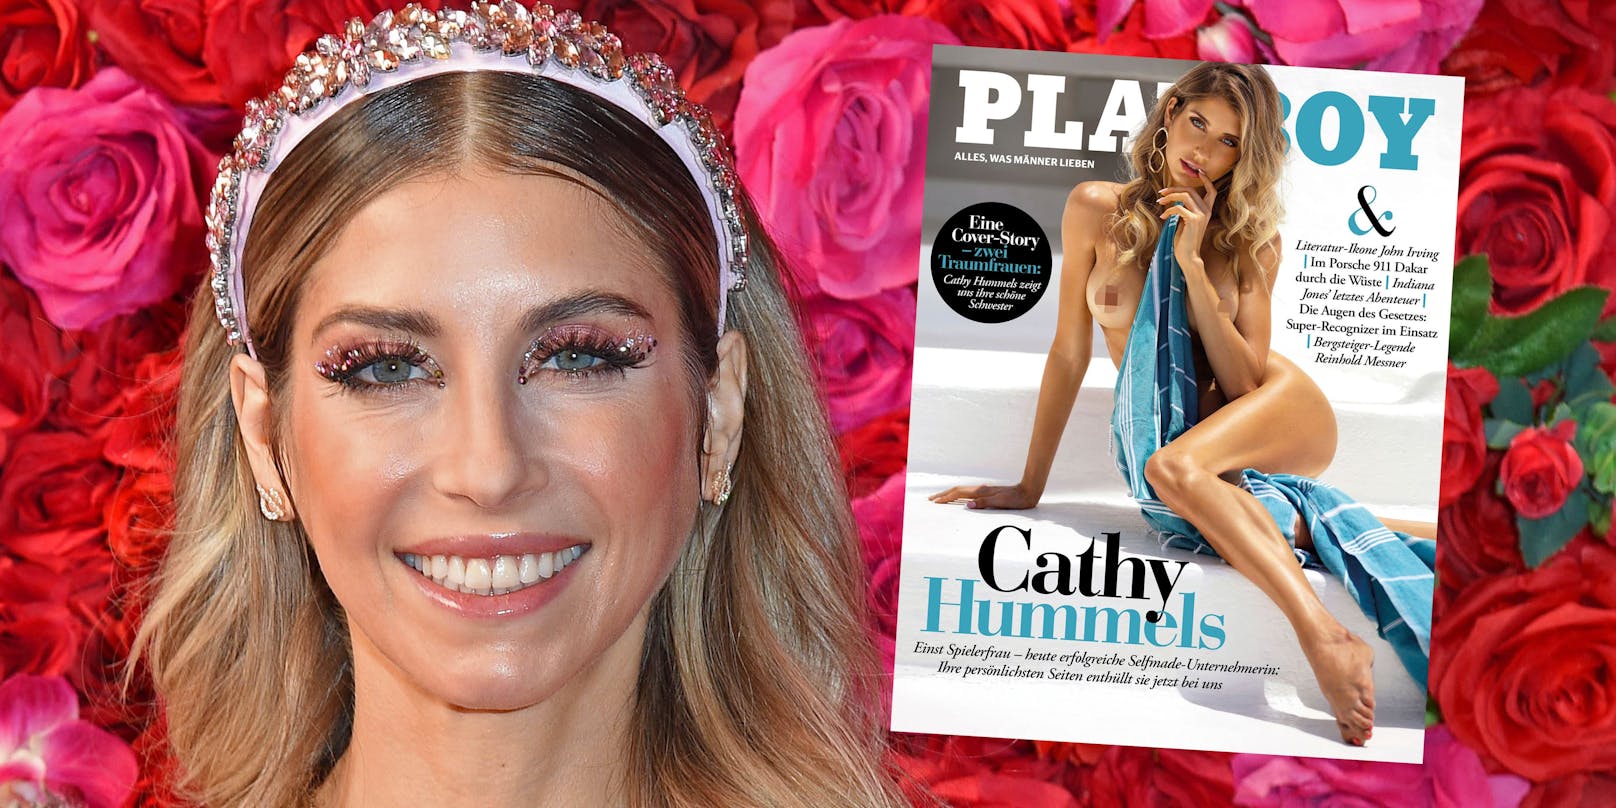 Cathy Hummels: Wichtige Botschaft hinter Playboy-Fotos